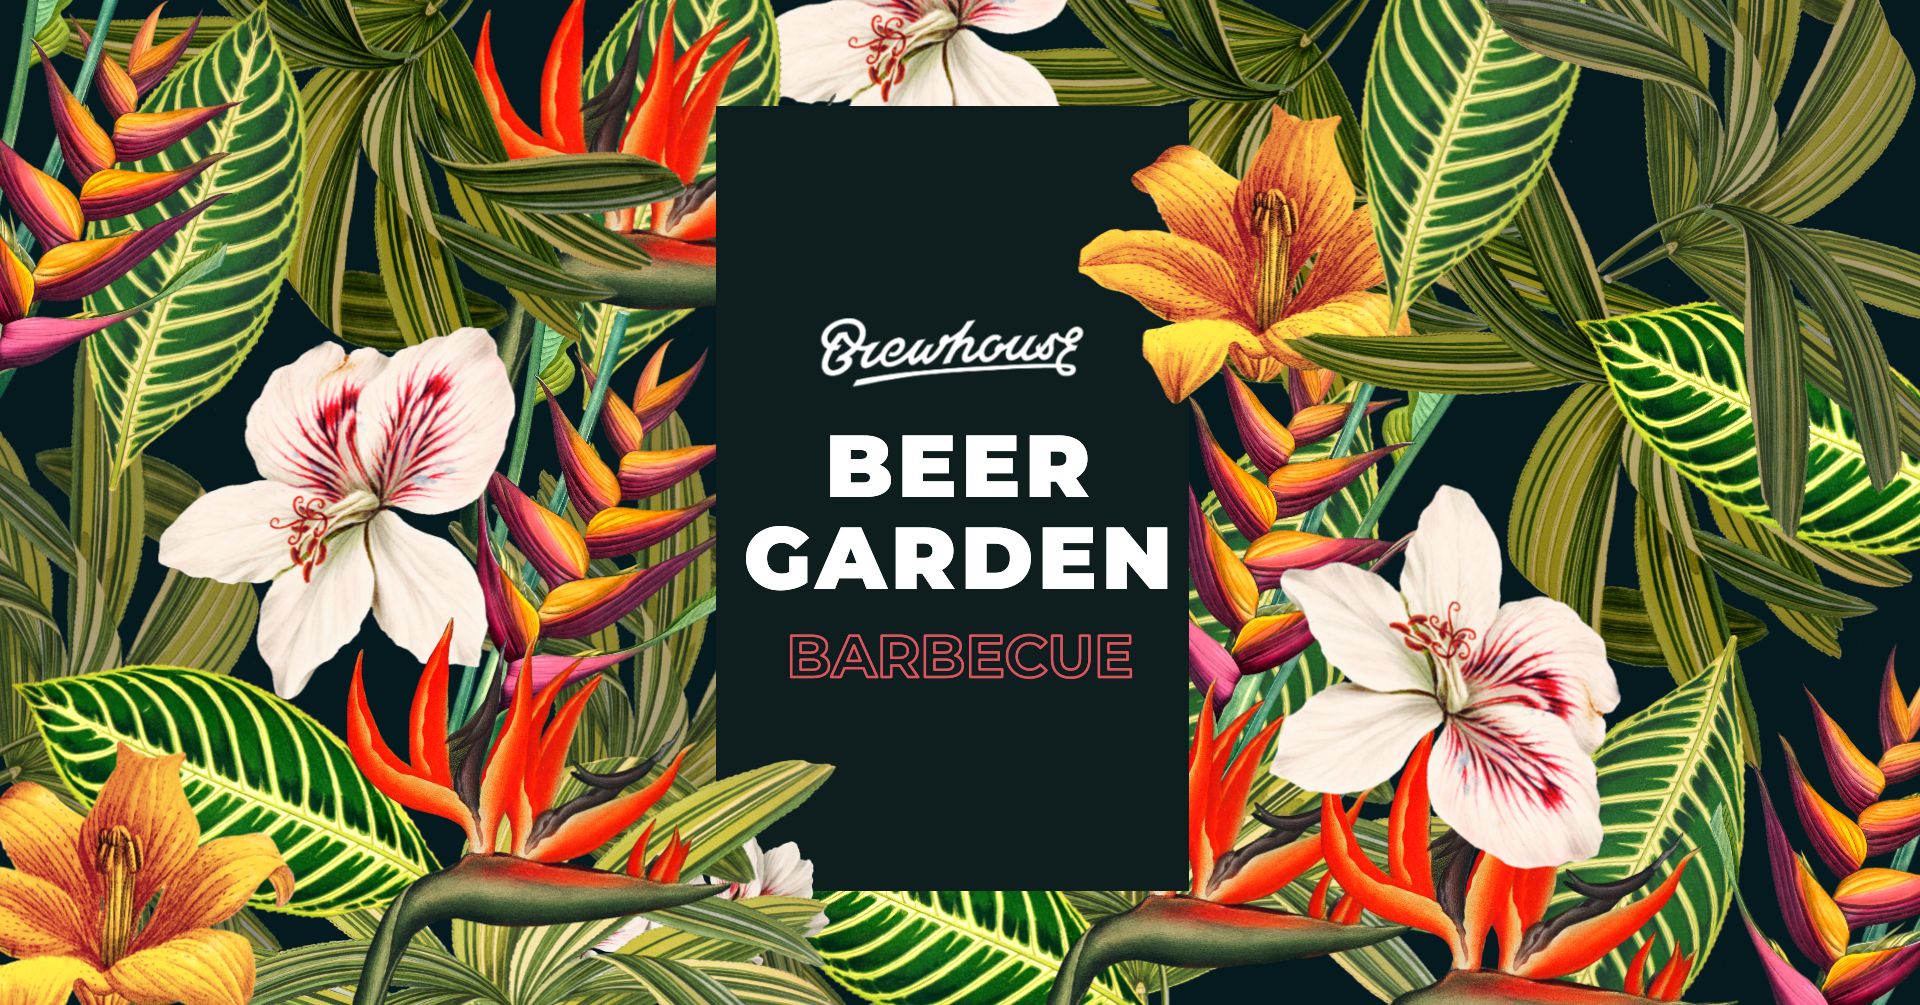 Beer Garden Barbecue Facebook Event Cover (4)